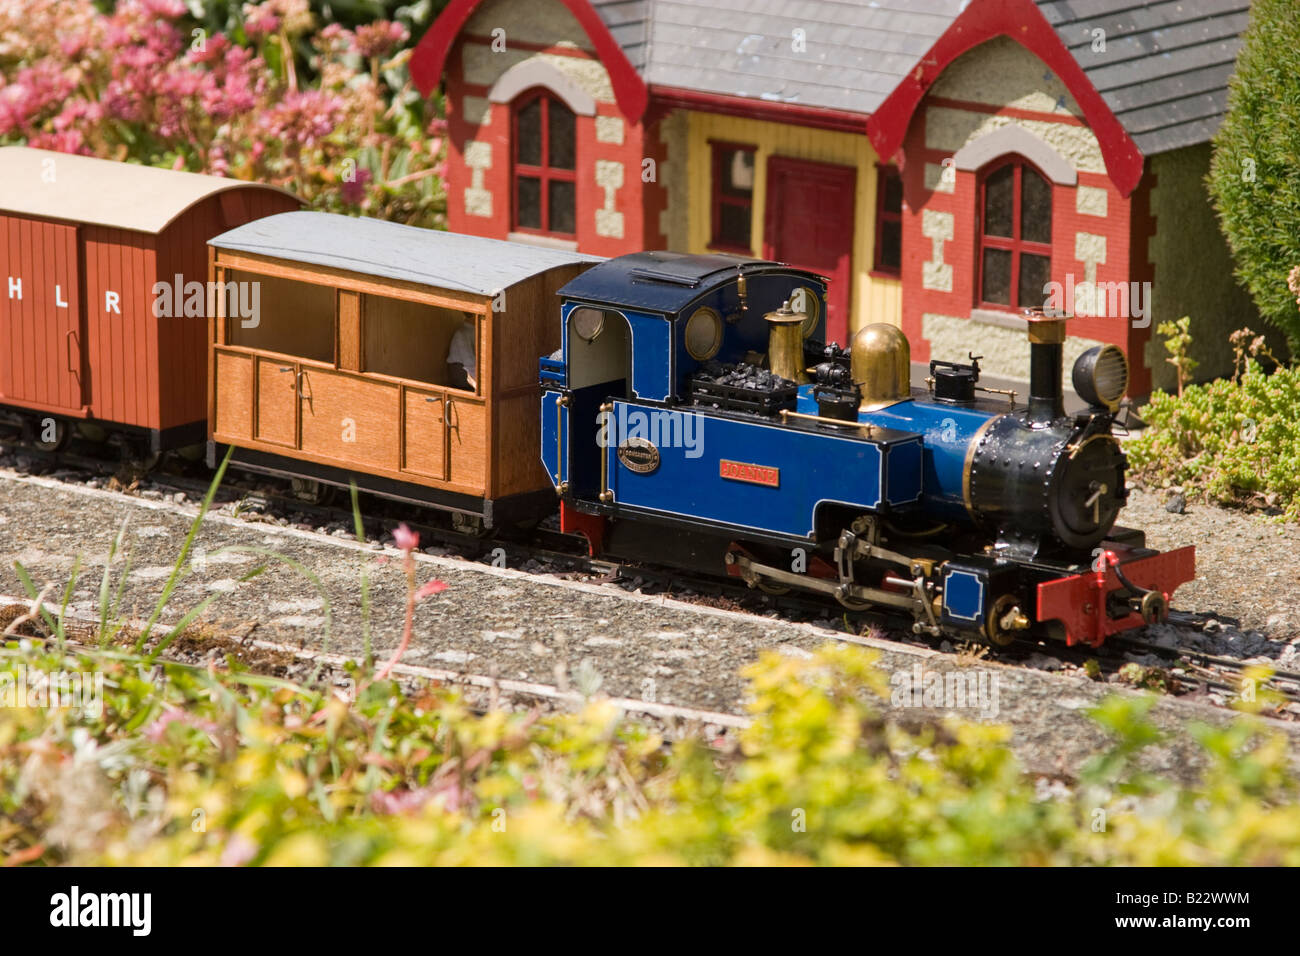 Model steam engine at station on garden railway Stock Photo